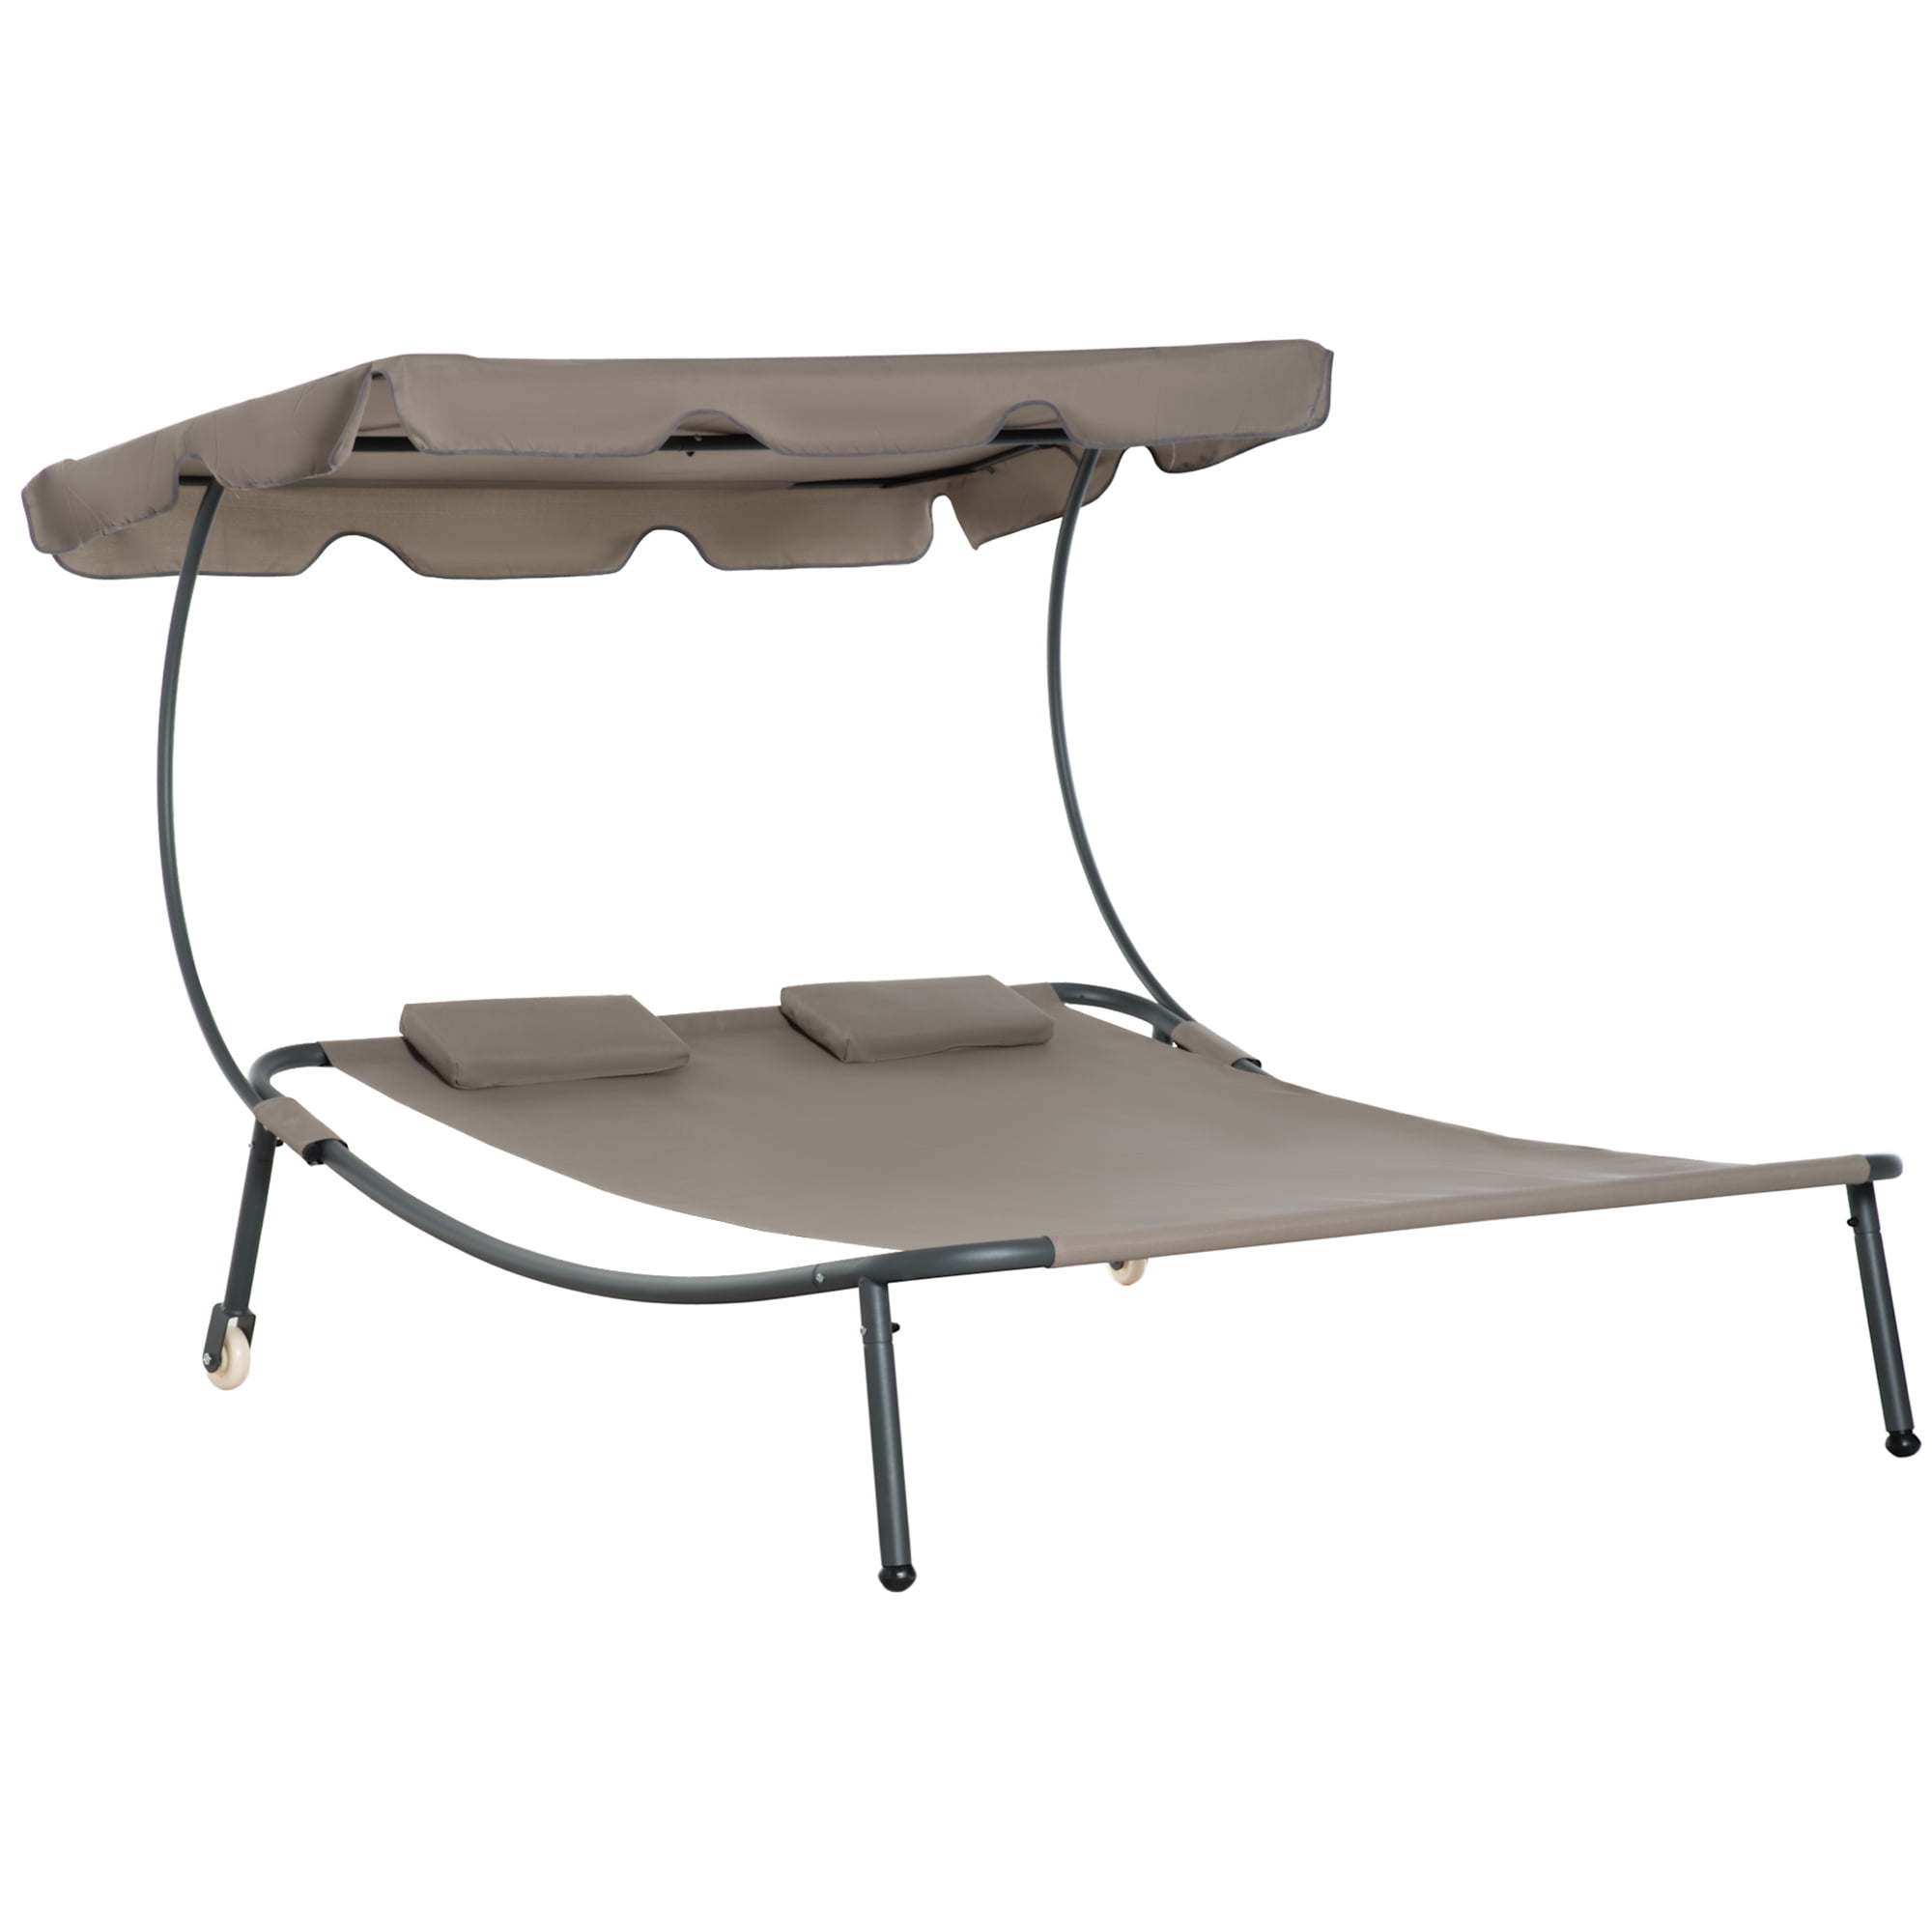 Grey Hammock With Stand Portable Outdoor Recliner Sun Bed Garden Patio Decking 